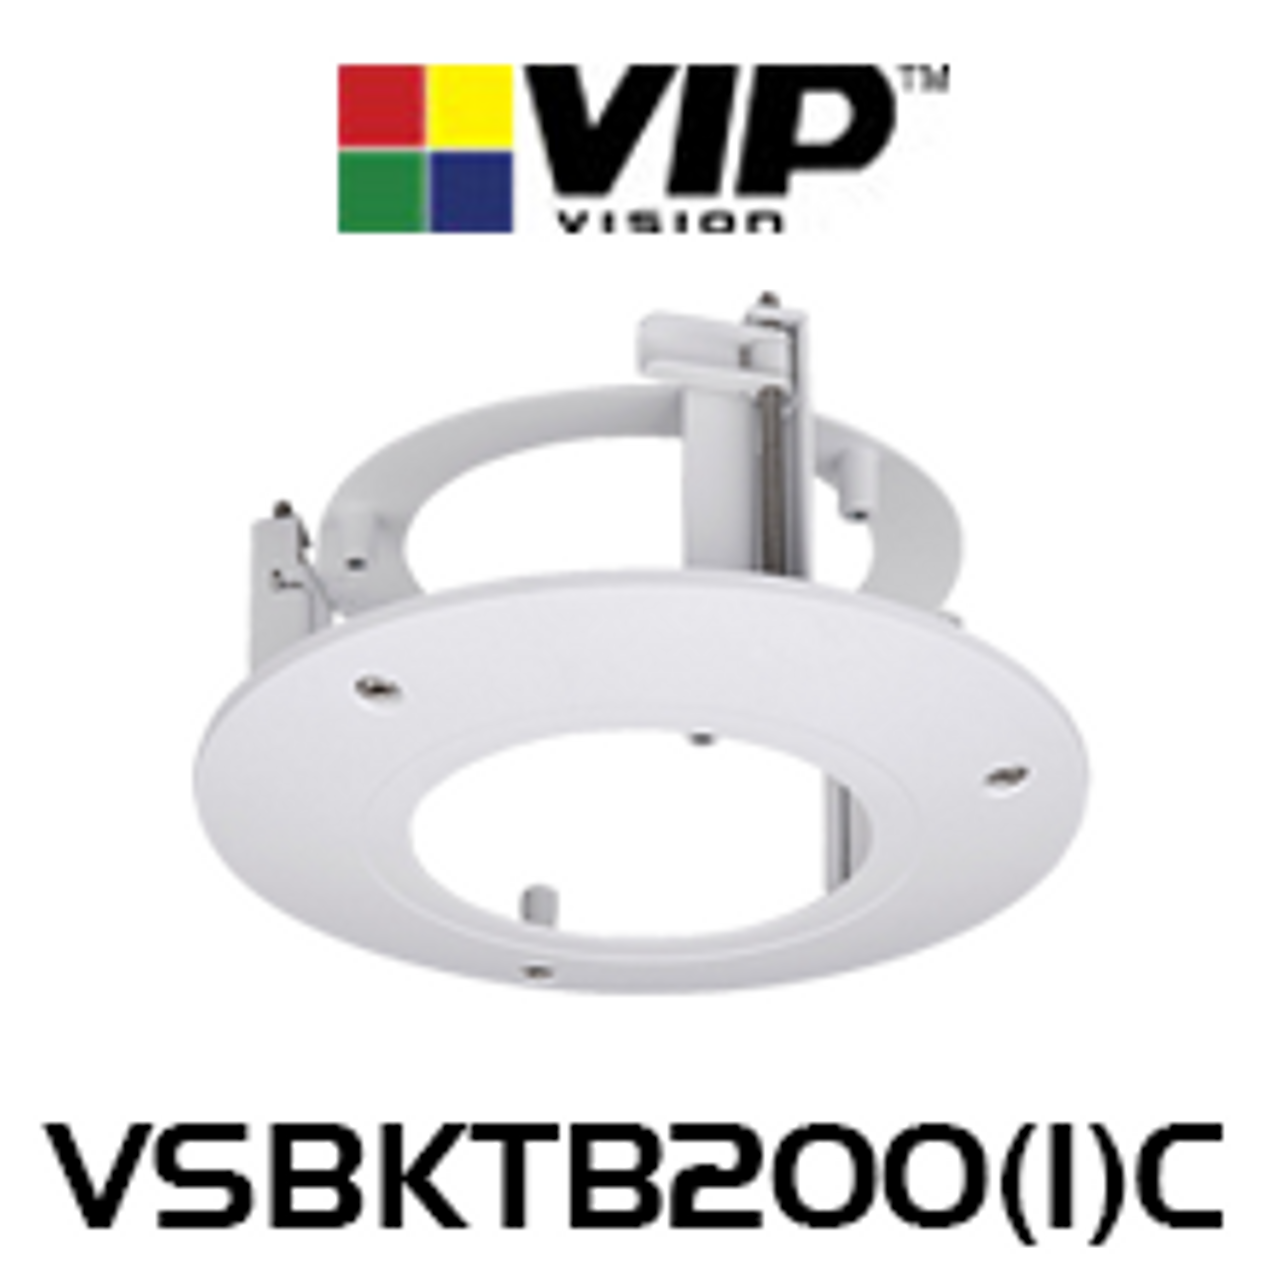 VIP Vision Recessed Ceiling Mount Camera Bracket